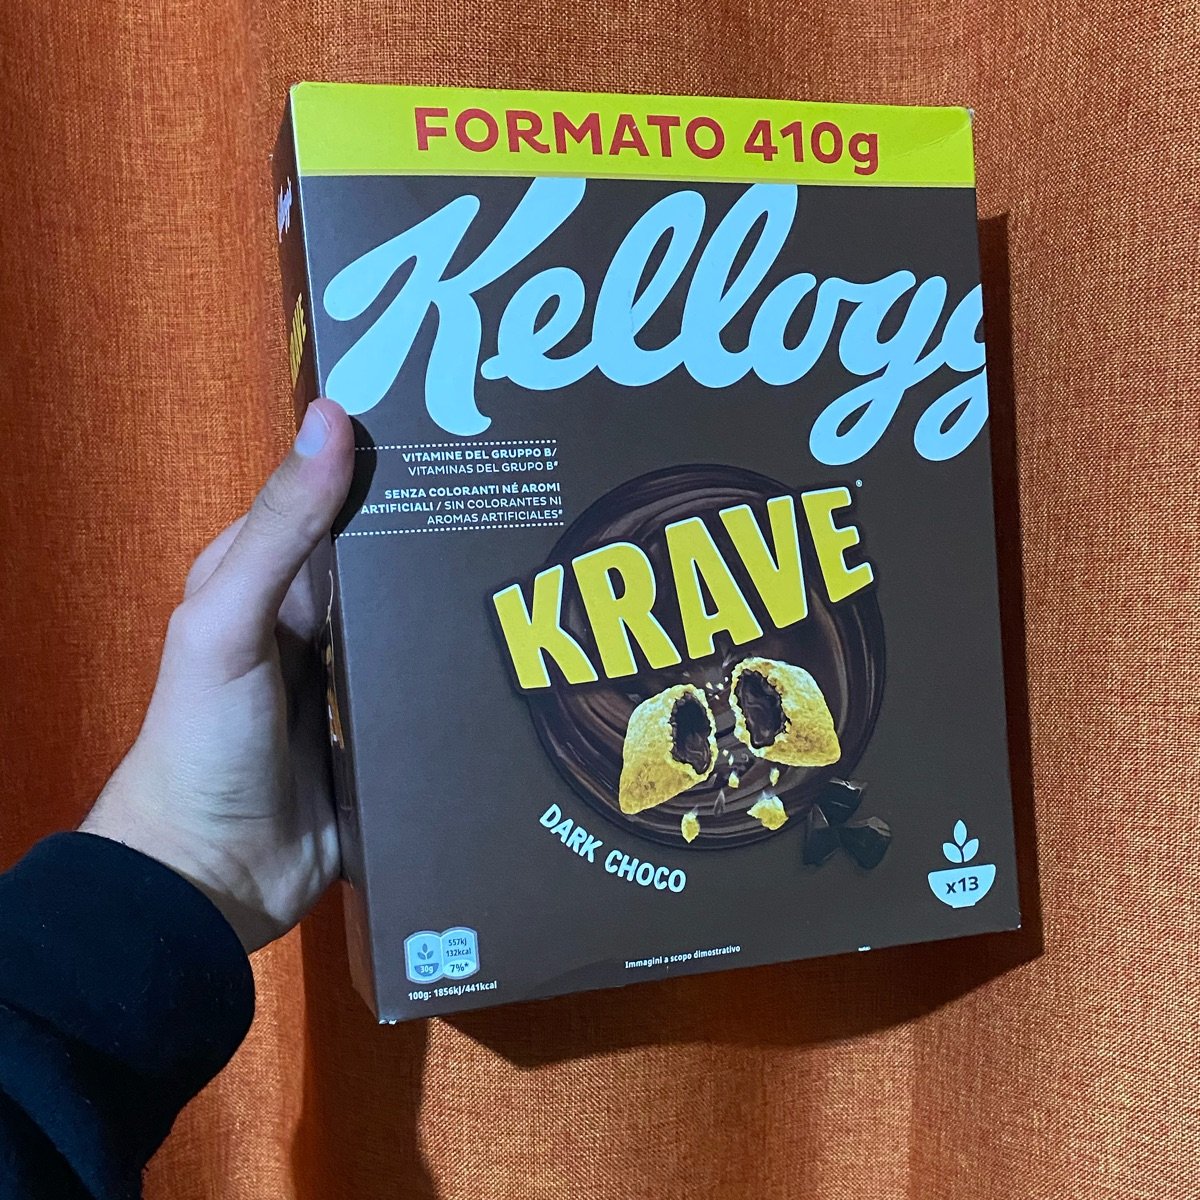 Kellogg krave dark choco Reviews